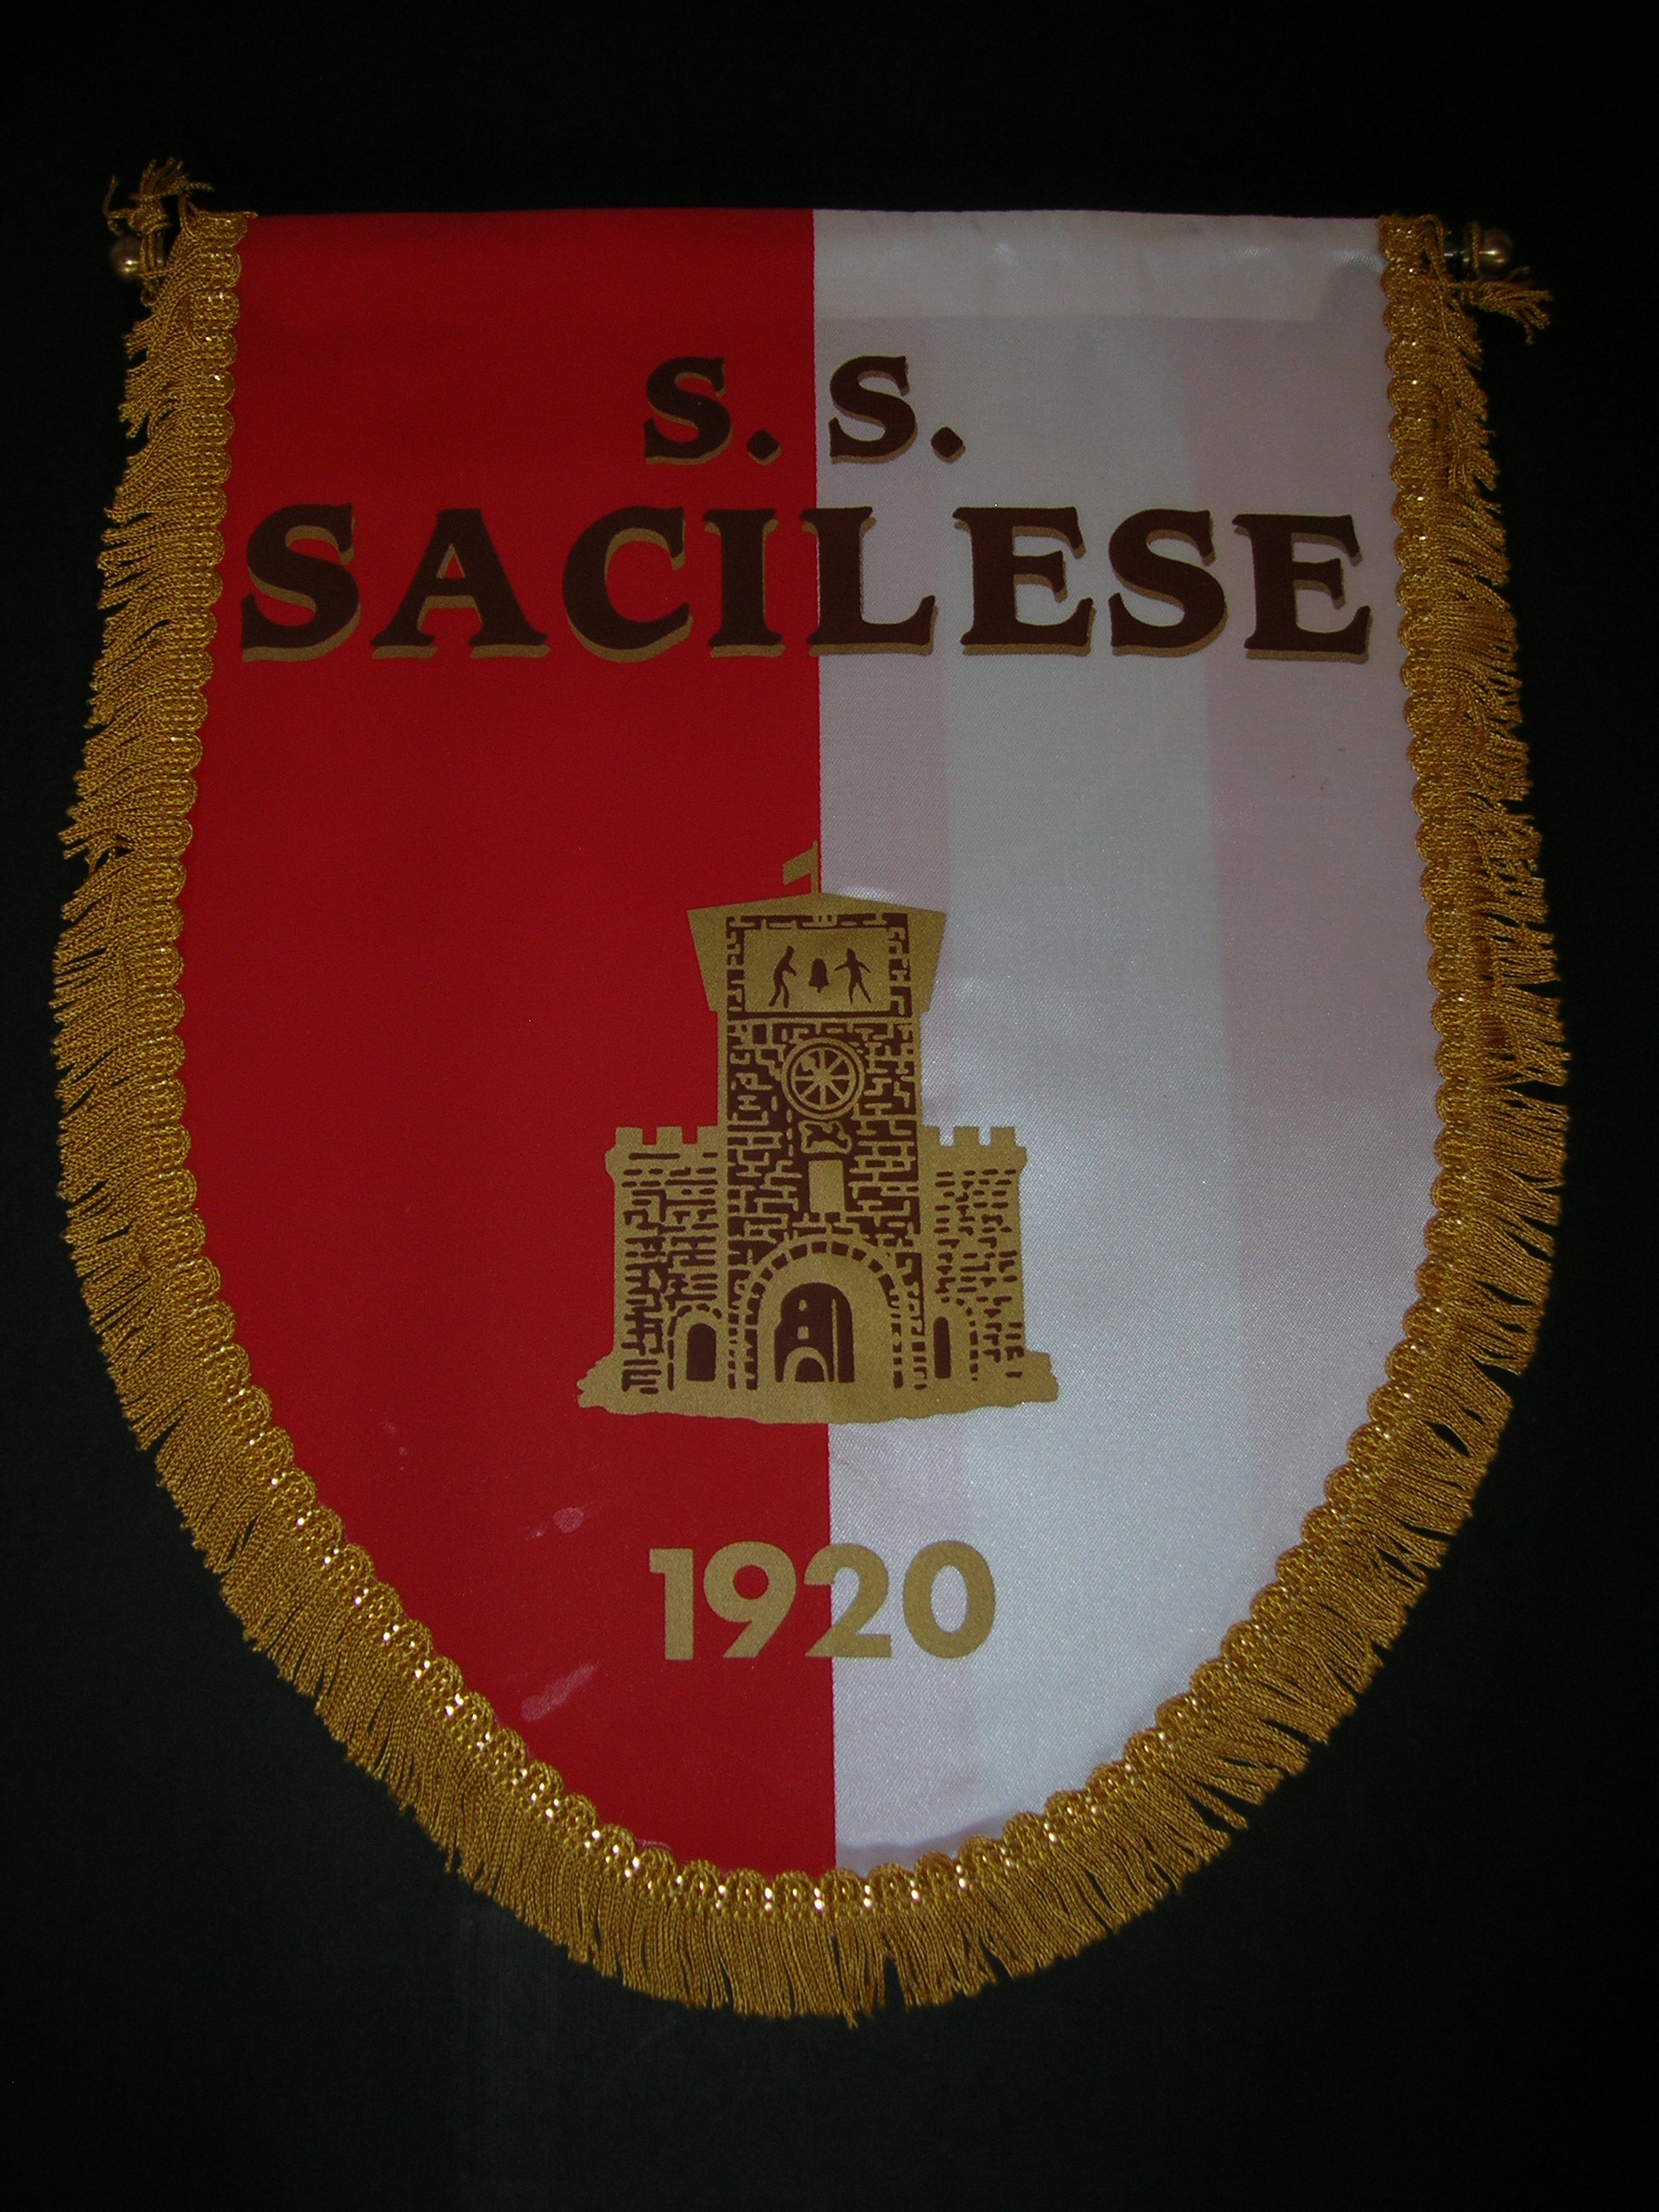 S S.  Sacilese  226